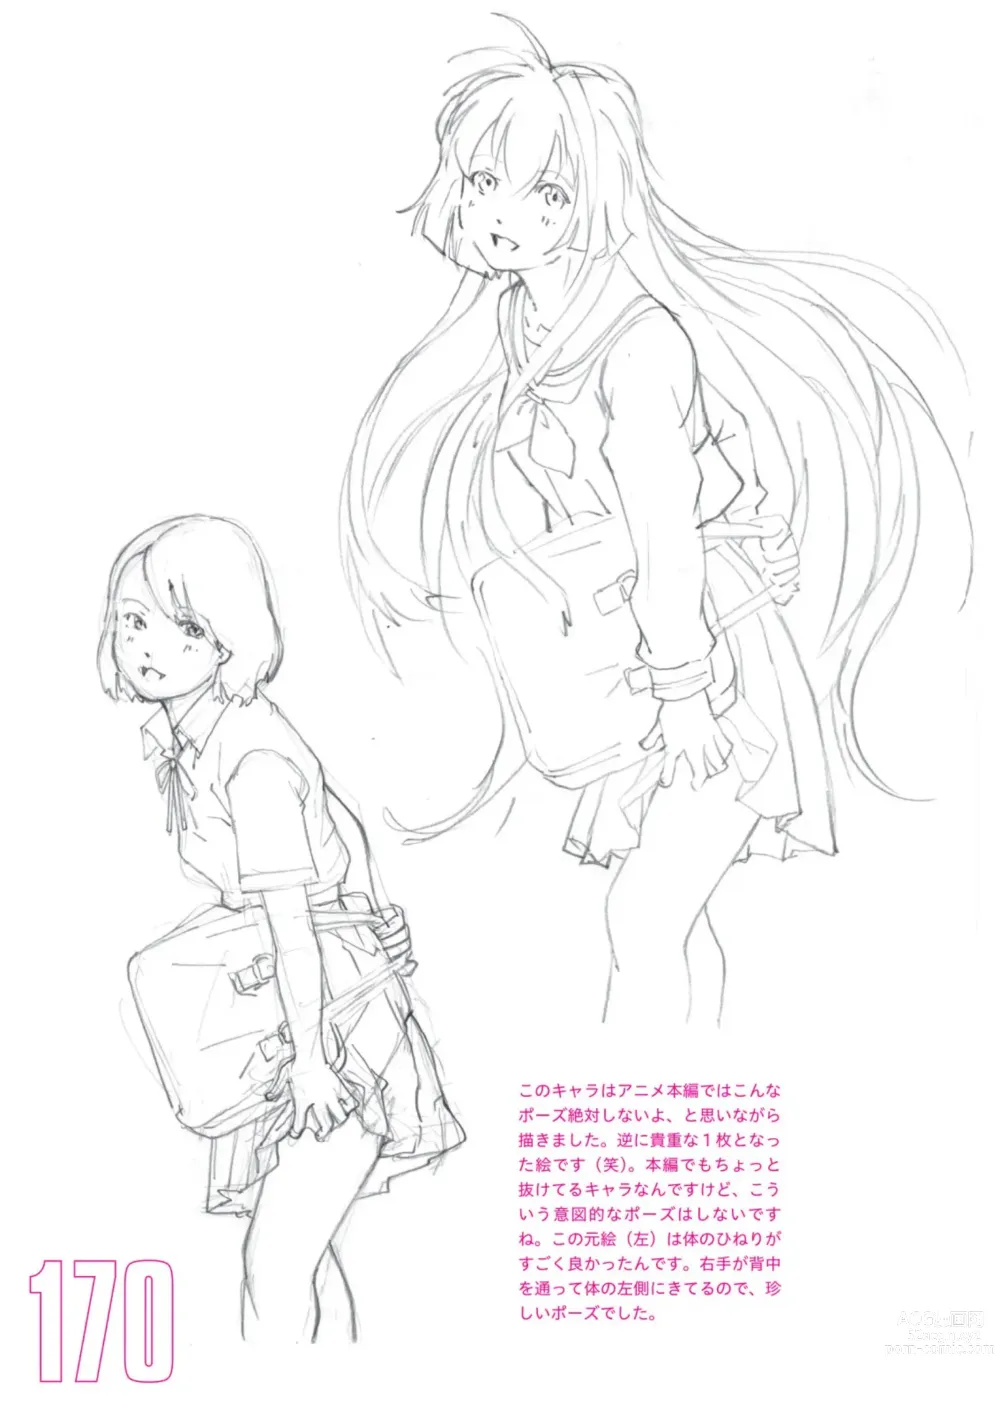 Page 152 of manga Toru Yoshida Tips for drawing women in 10 minutes 270 Uniforms